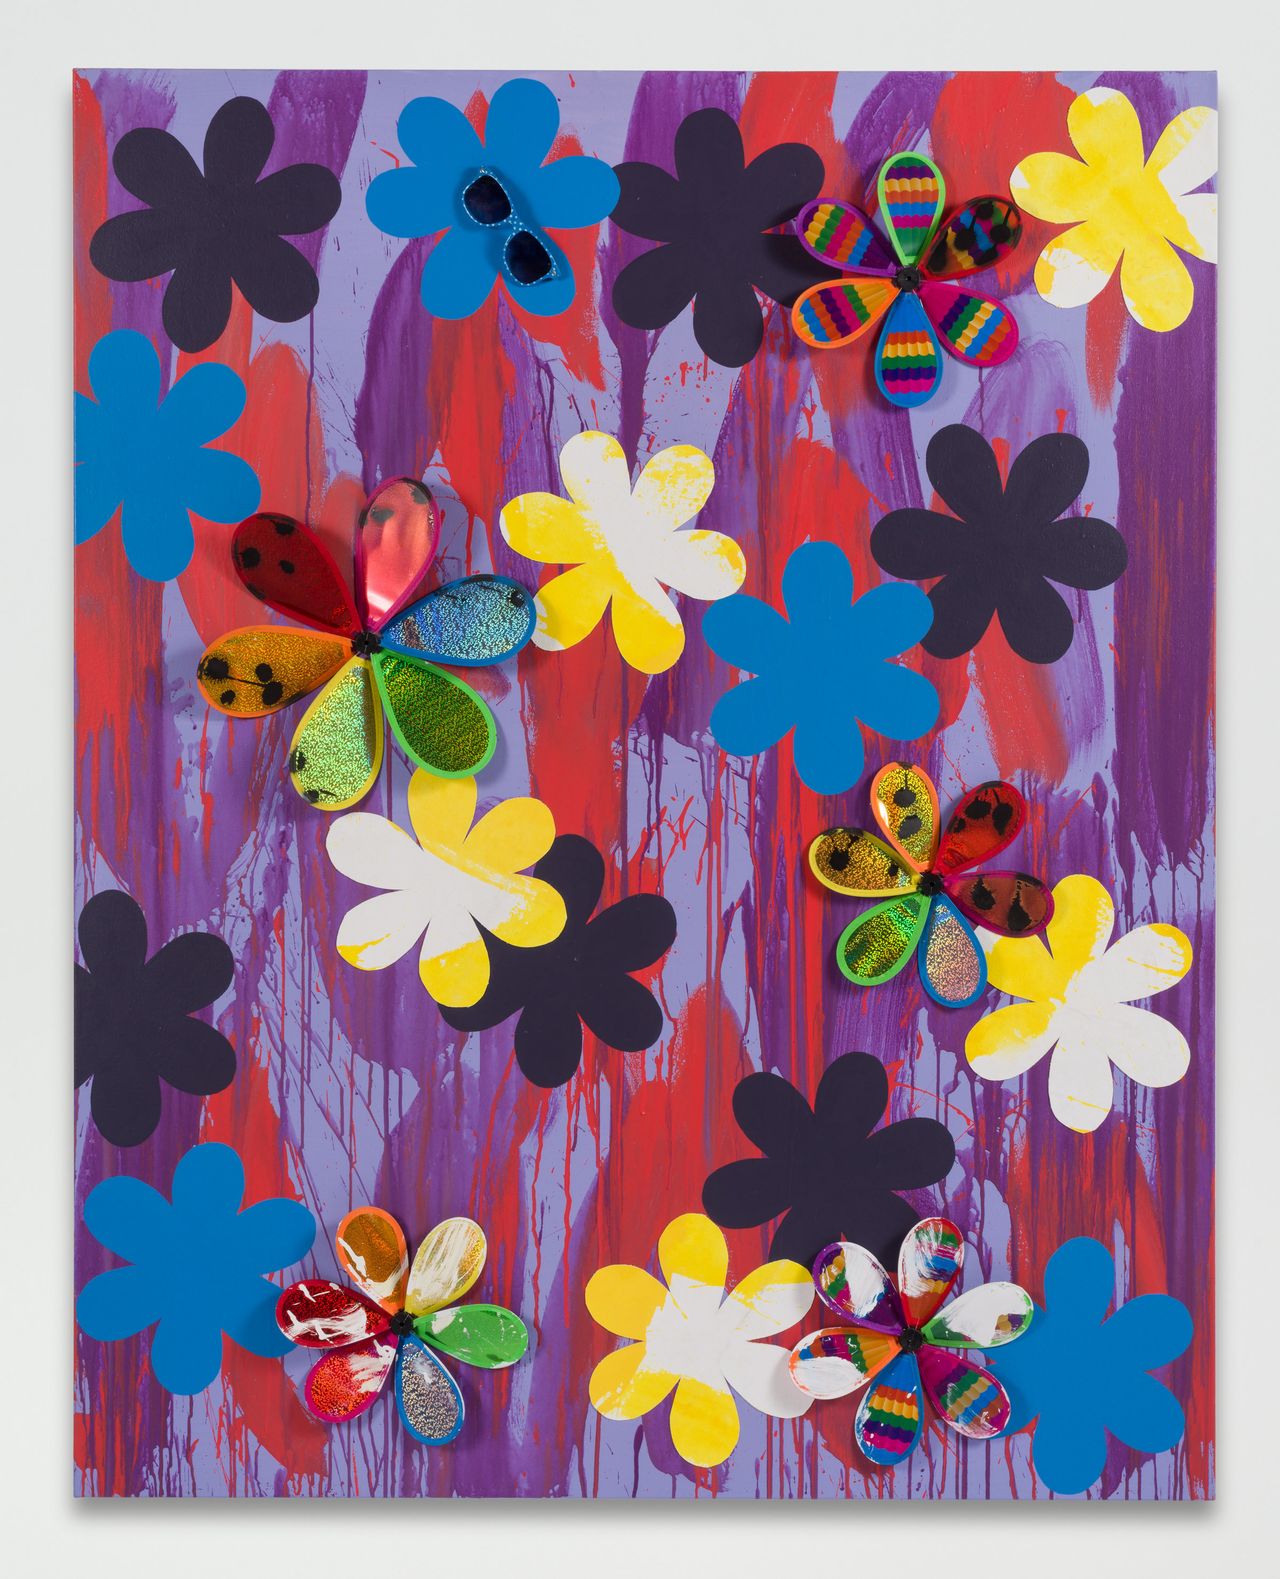 Sarah Cain, "Emily," 2016. Sunglasses, acrylic paint, canvas, and pinwheels on canvas, 60 x 48 inches.